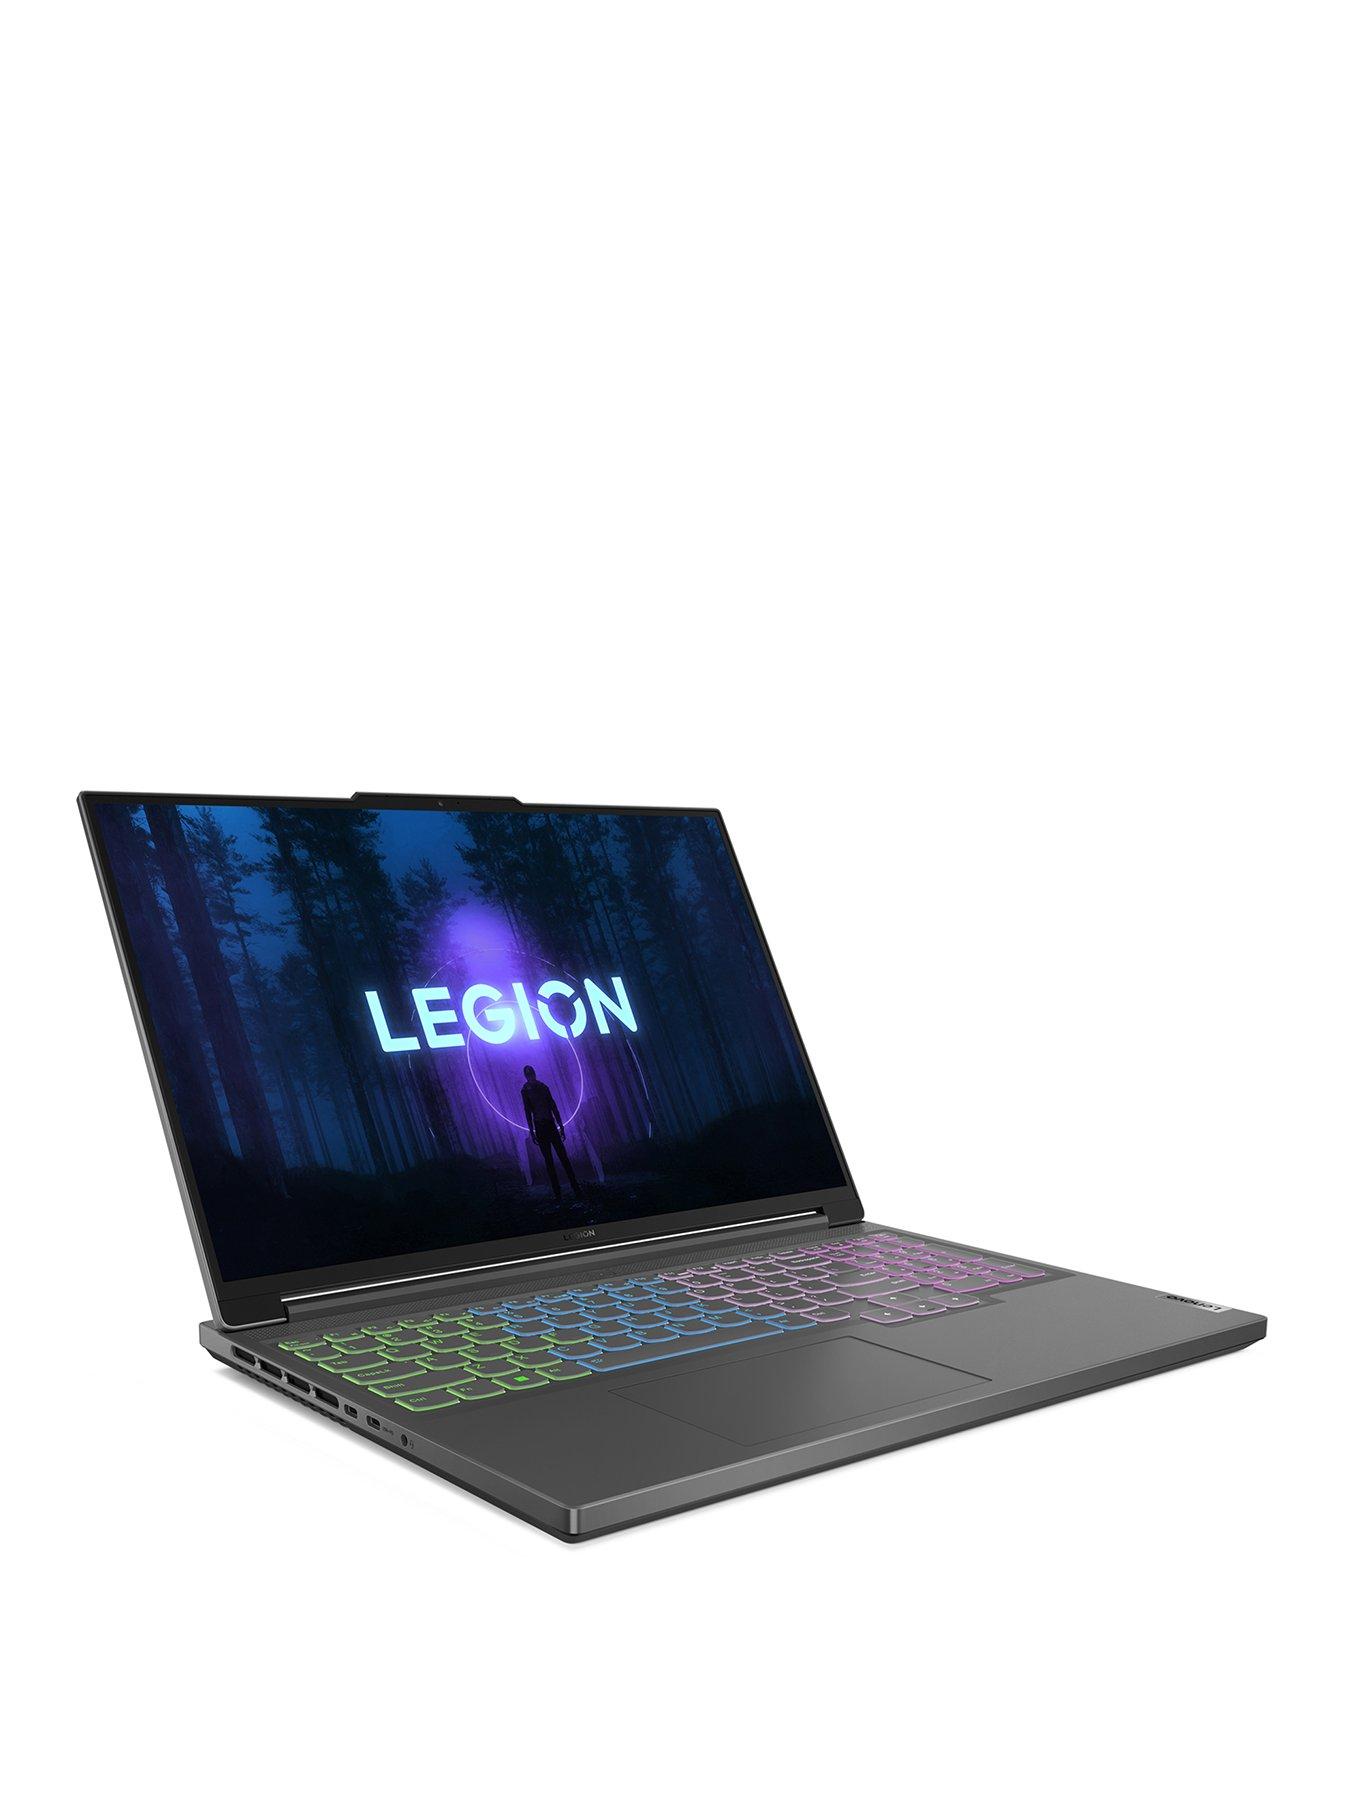  Lenovo Legion 5 Gaming Laptop, 15.6 FHD IPS 500nits 240Hz  Dolby Vision, Core i7-10750H, Wi-Fi 6, White Backlit Keyboard, Webcam,  USB-C, HDMI, GeForce RTX 2060, Windows 10, 16GB RAM, 512GB PCIe